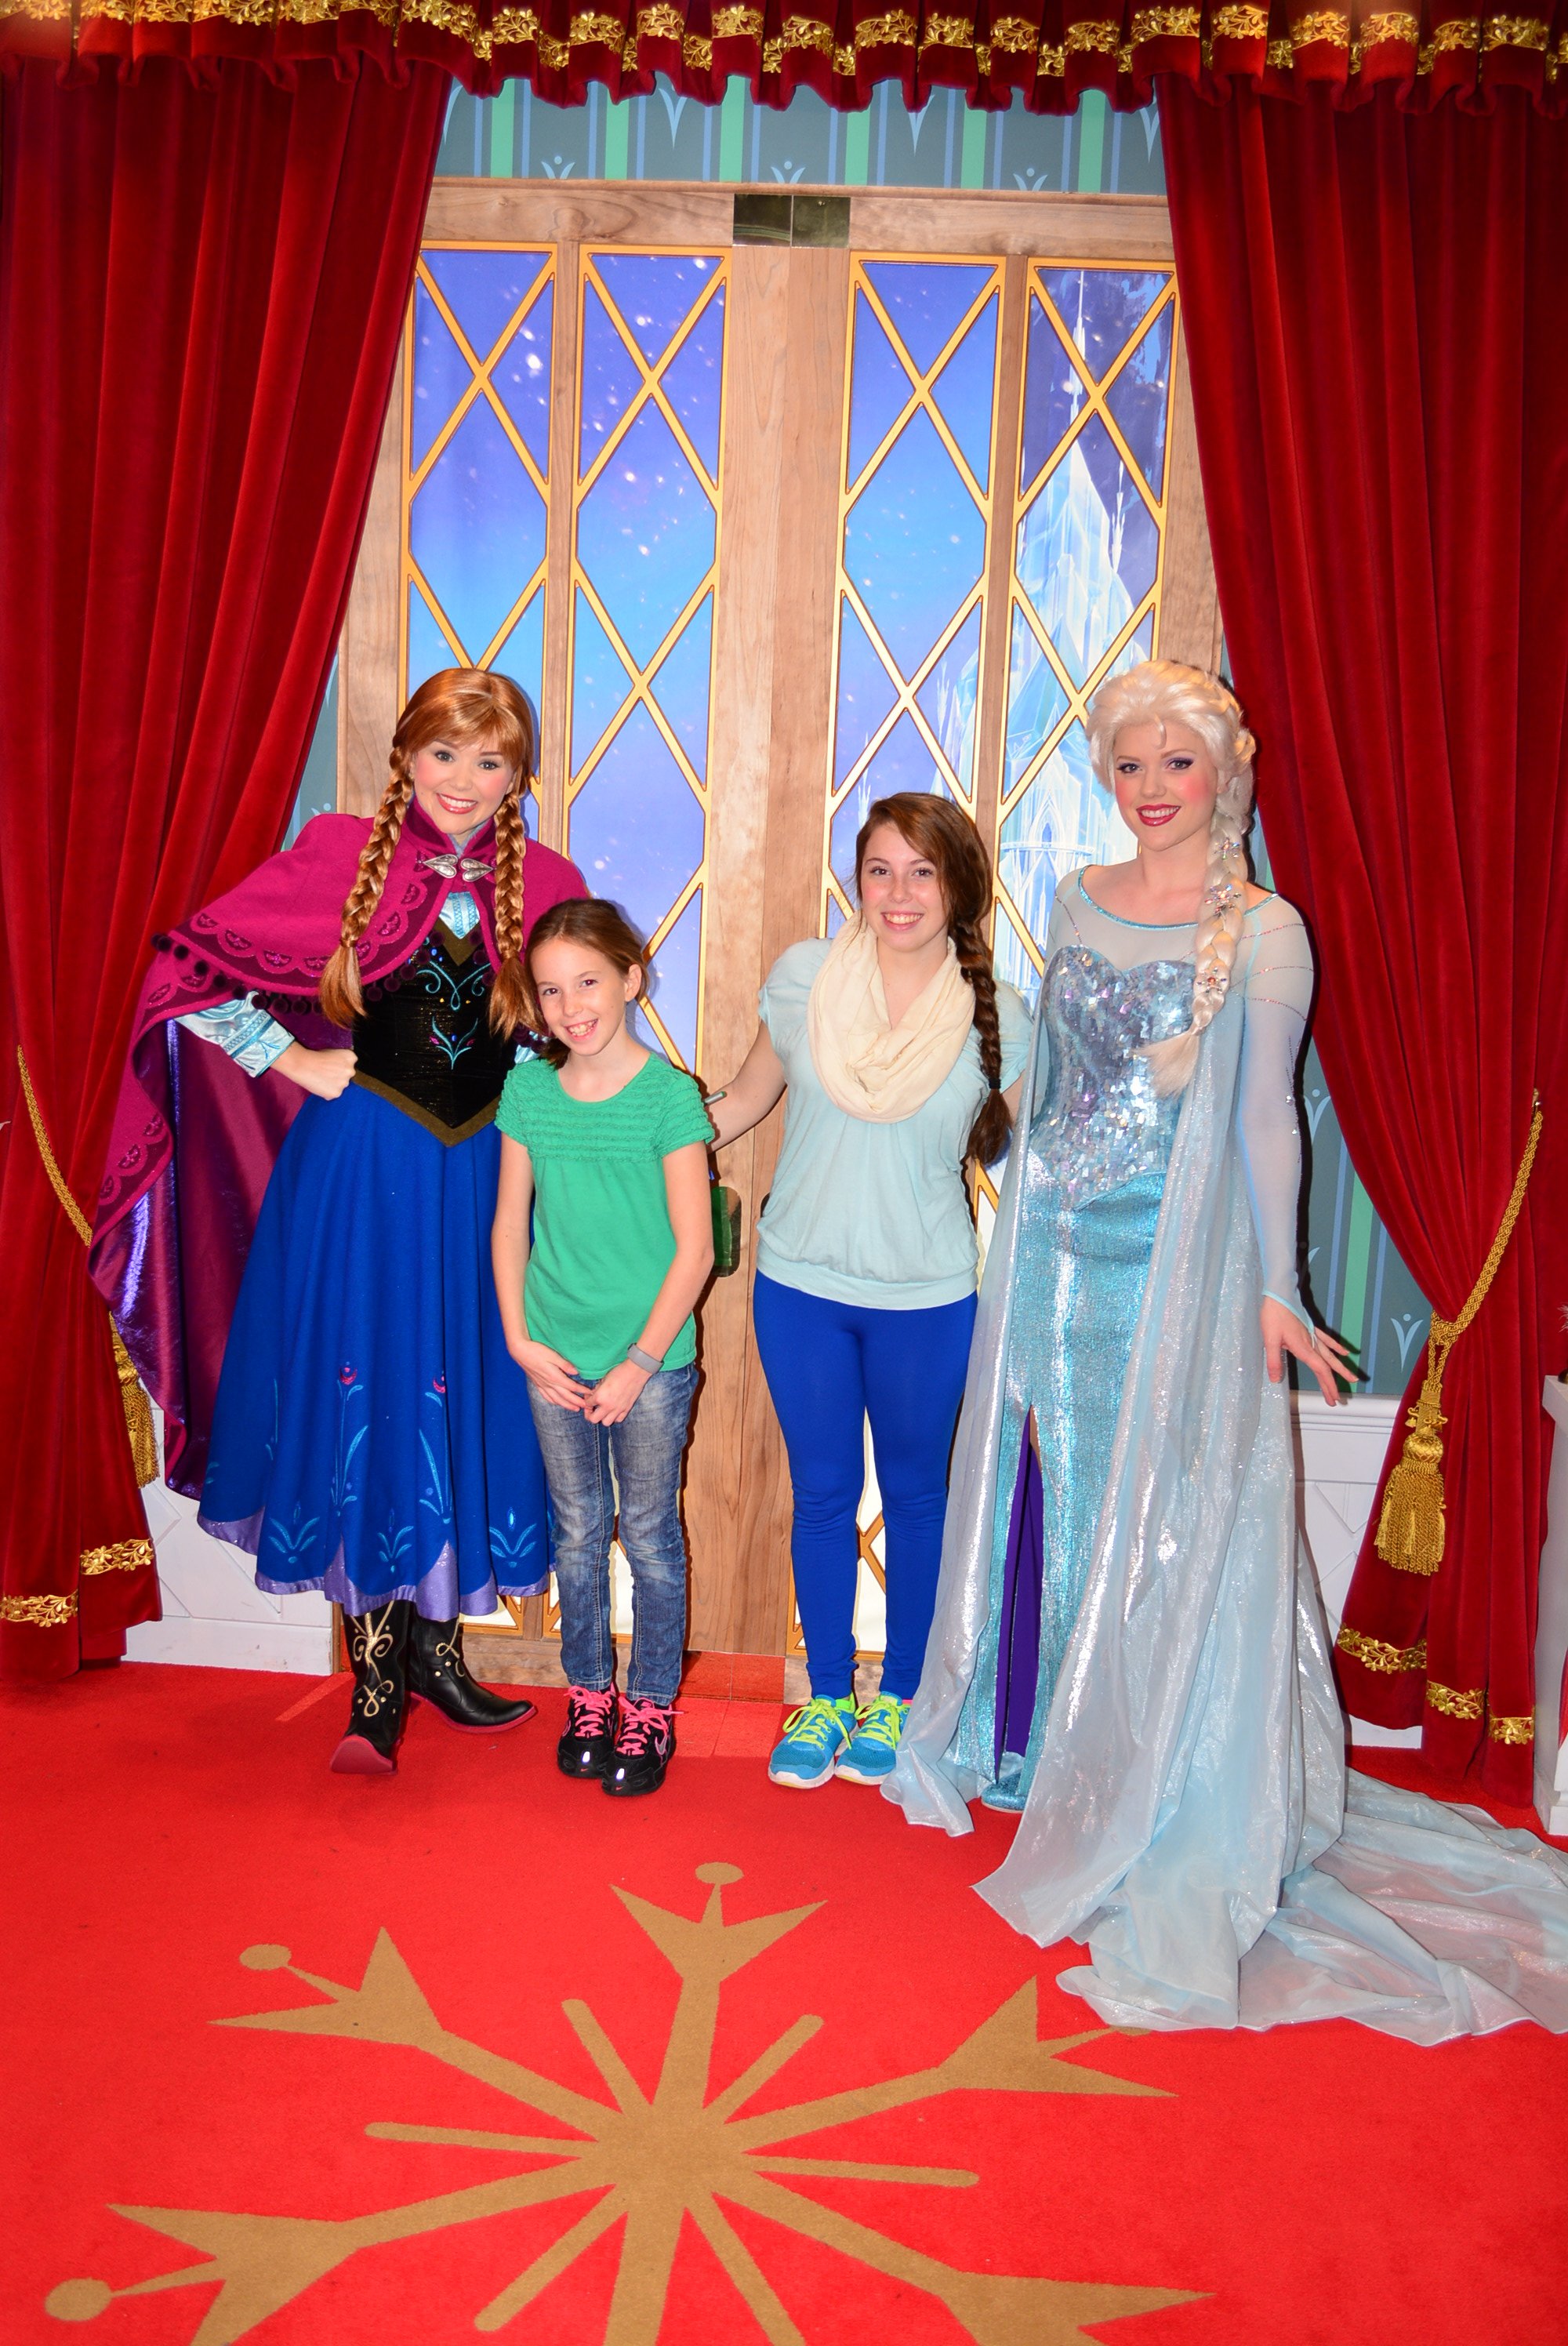 Walt Disney World, Epcot, Norway, Anna and Elsa meet and greet